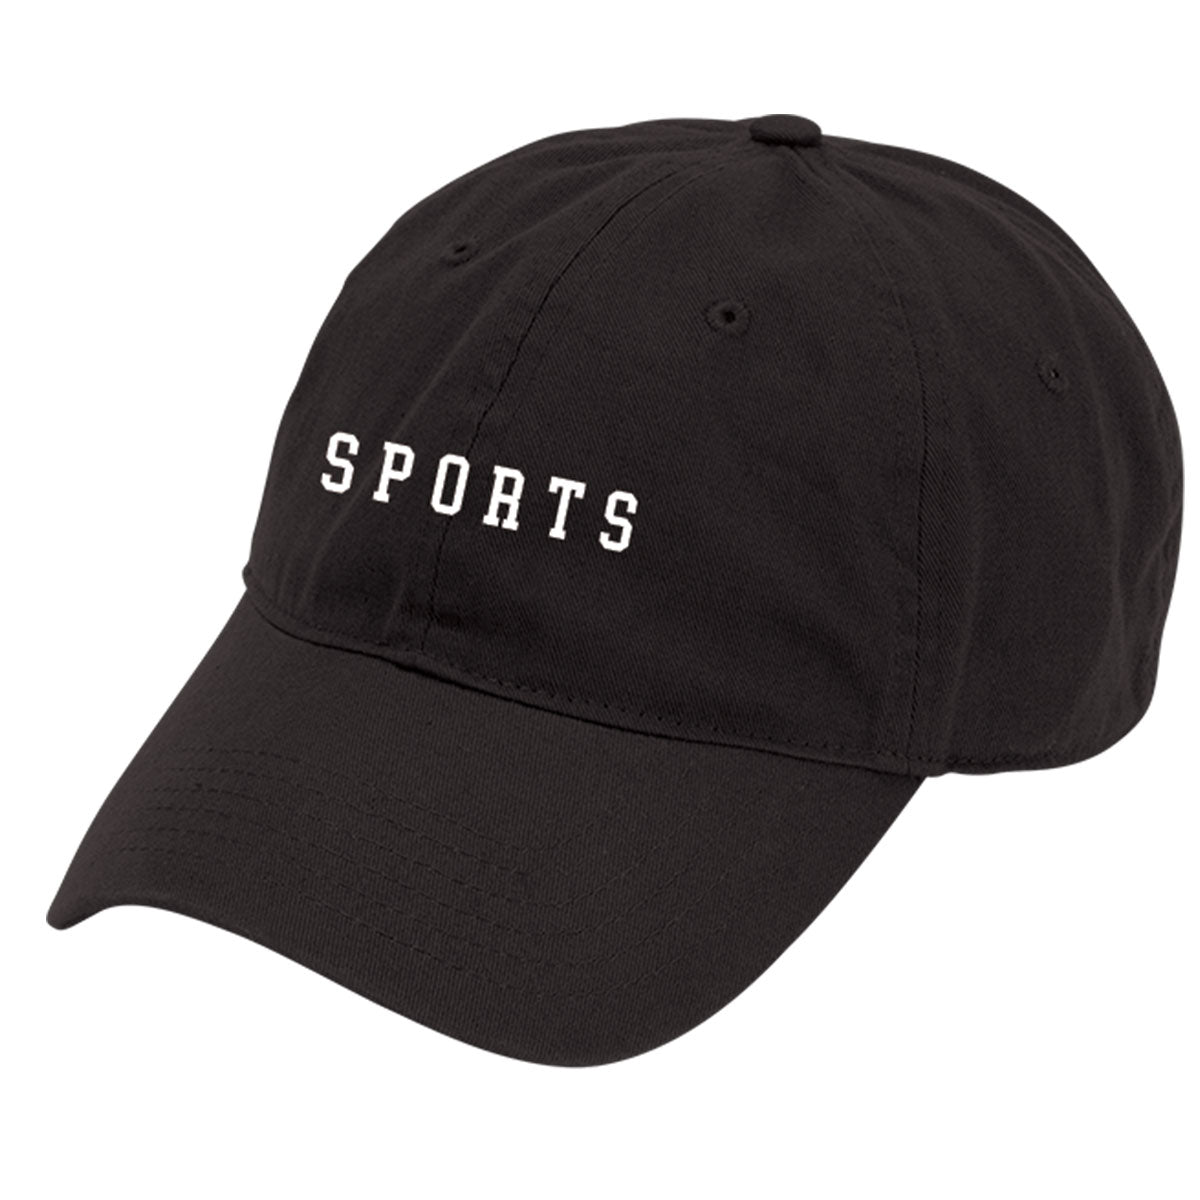 Sports Black Cap